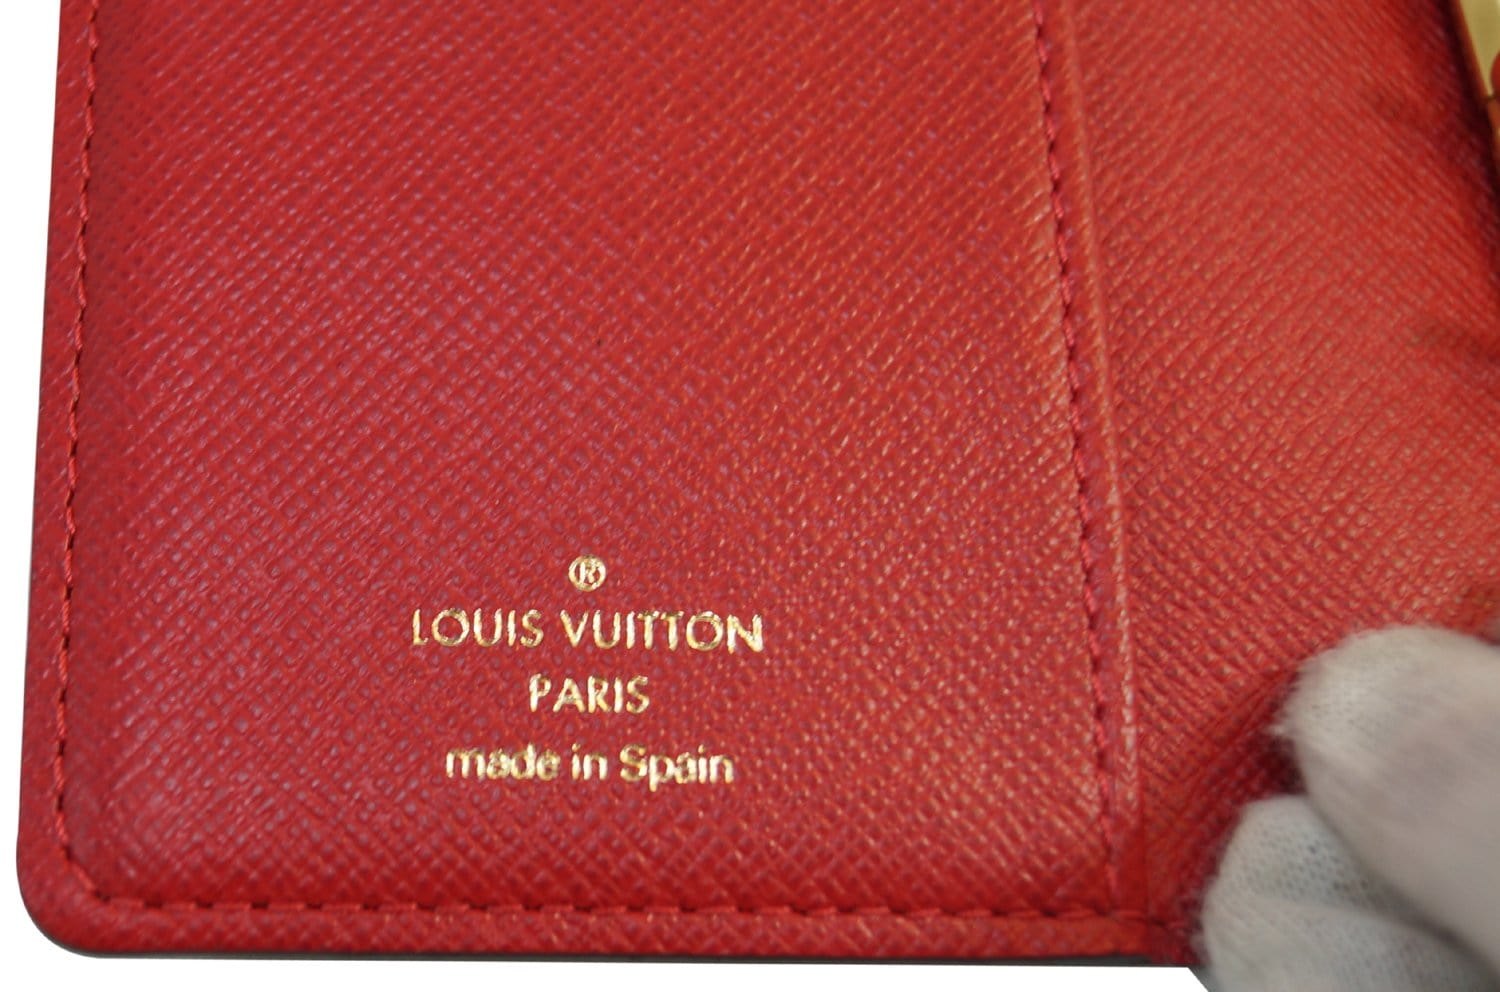 Louis Vuitton Damier Azur Small Ring Agenda Cover - The Trove